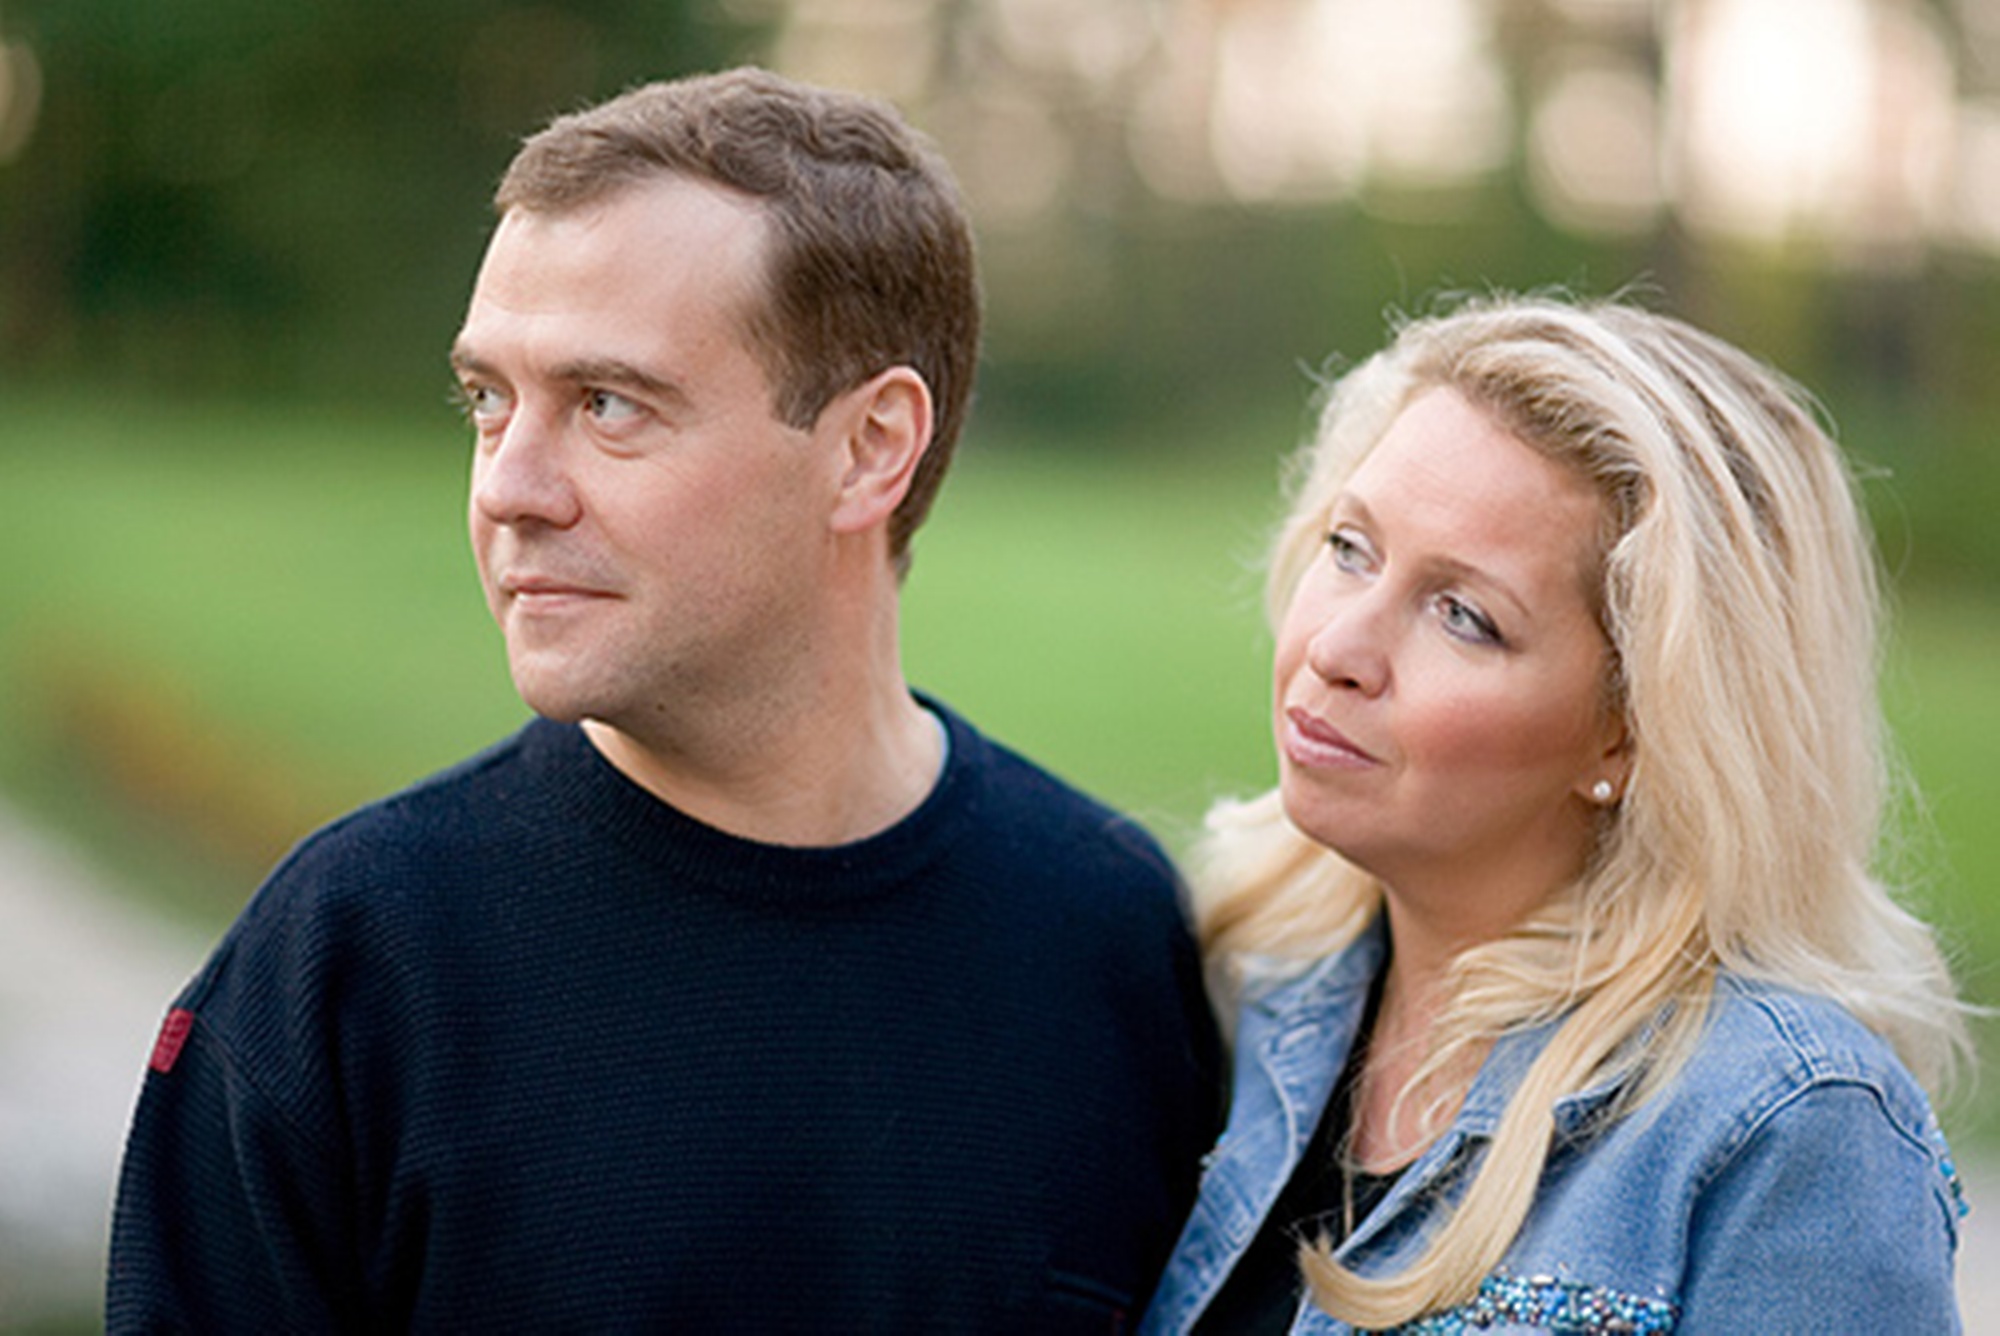 http://upload.wikimedia.org/wikipedia/commons/c/cb/Dmitry_Medvedev_and_his_wife_Svetlana_Medvedeva.jpg